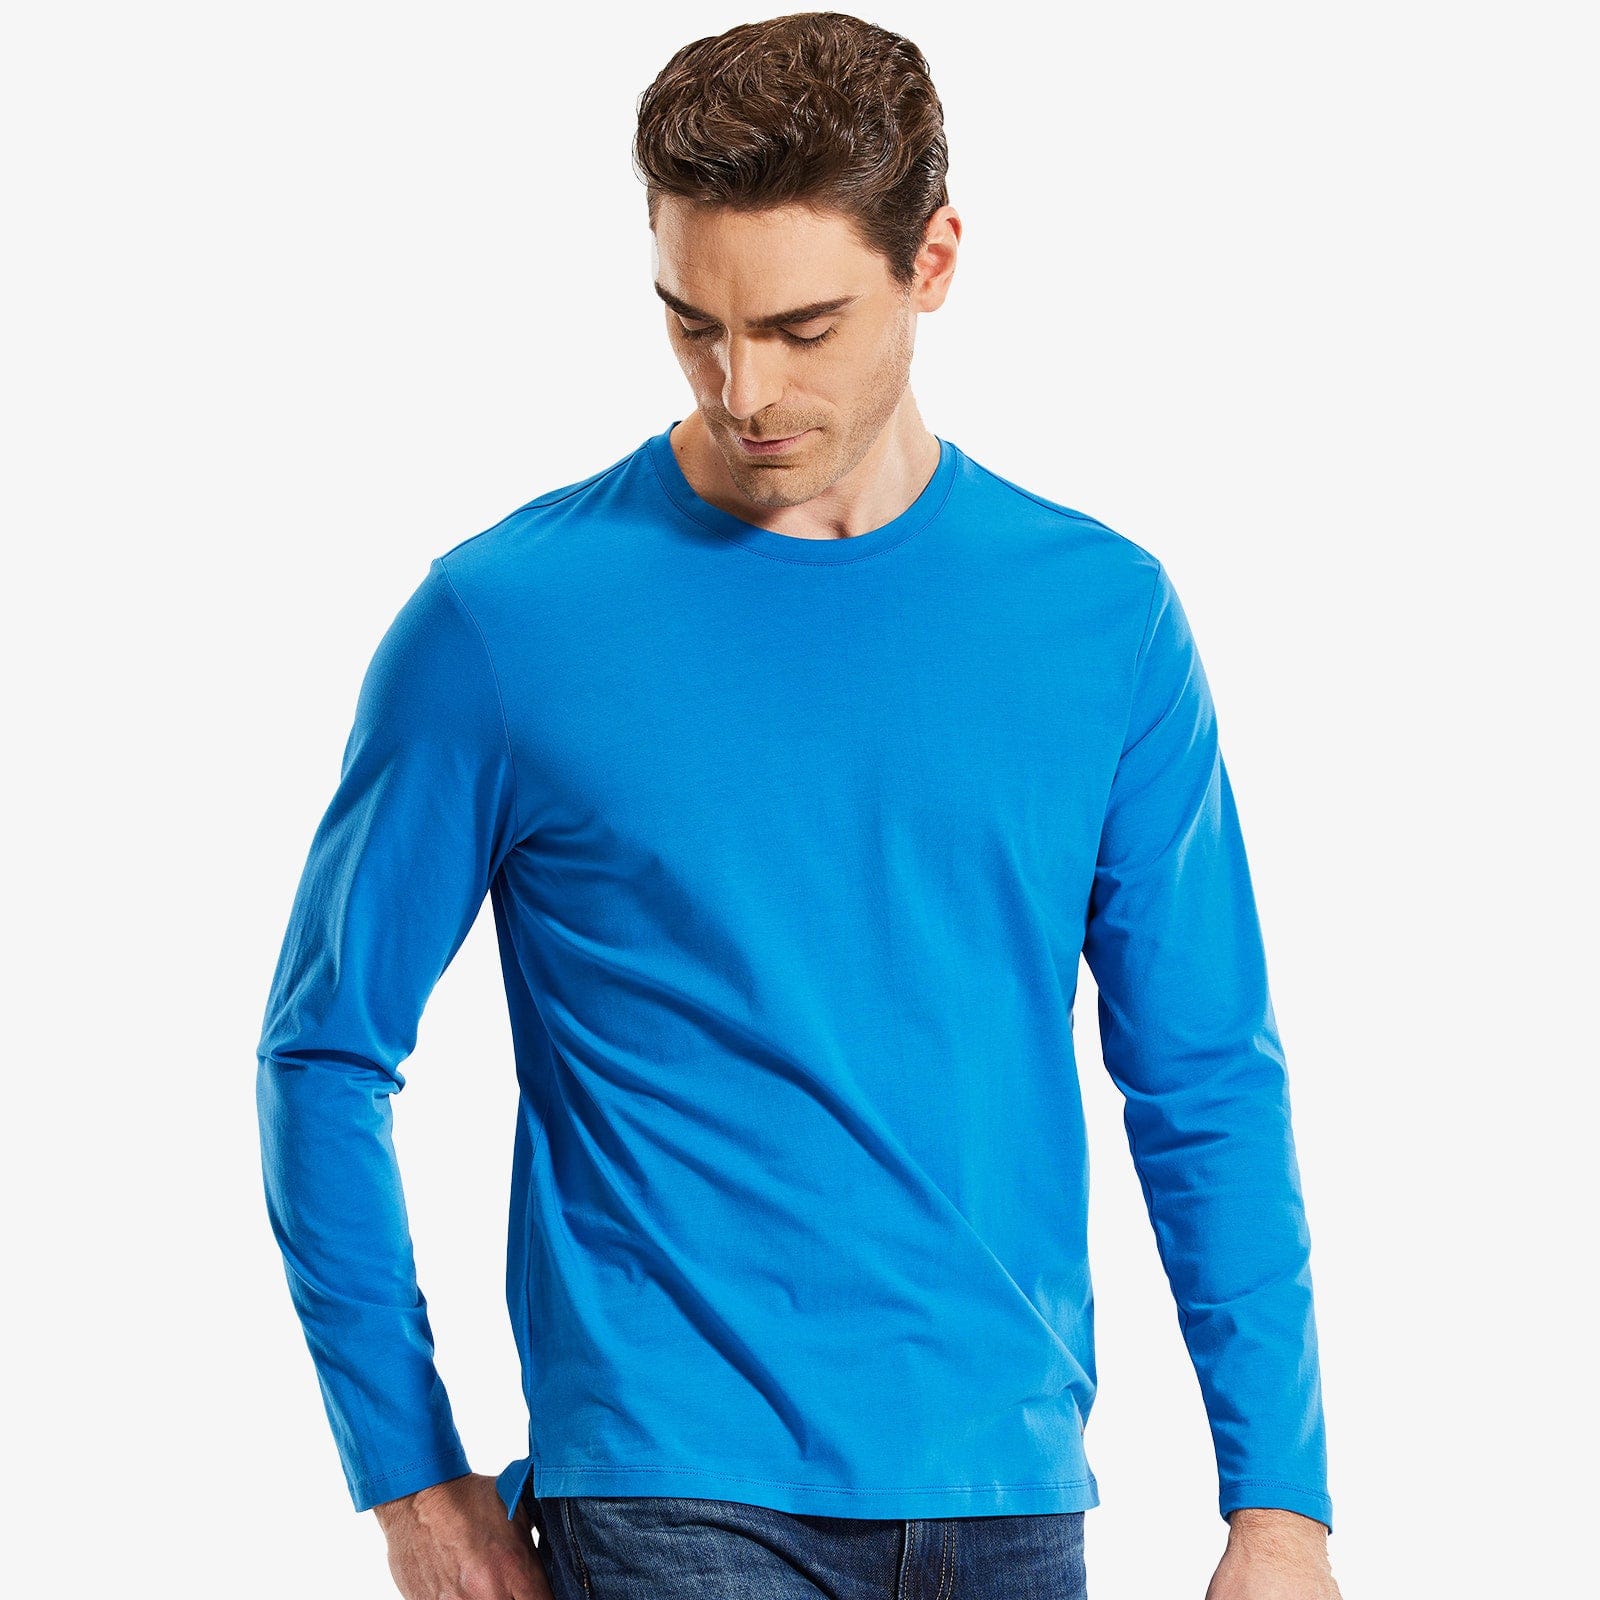 Men's Long Sleeve Shirts Cotton Tees Crew Neck T-Shirt, Blue / XXL